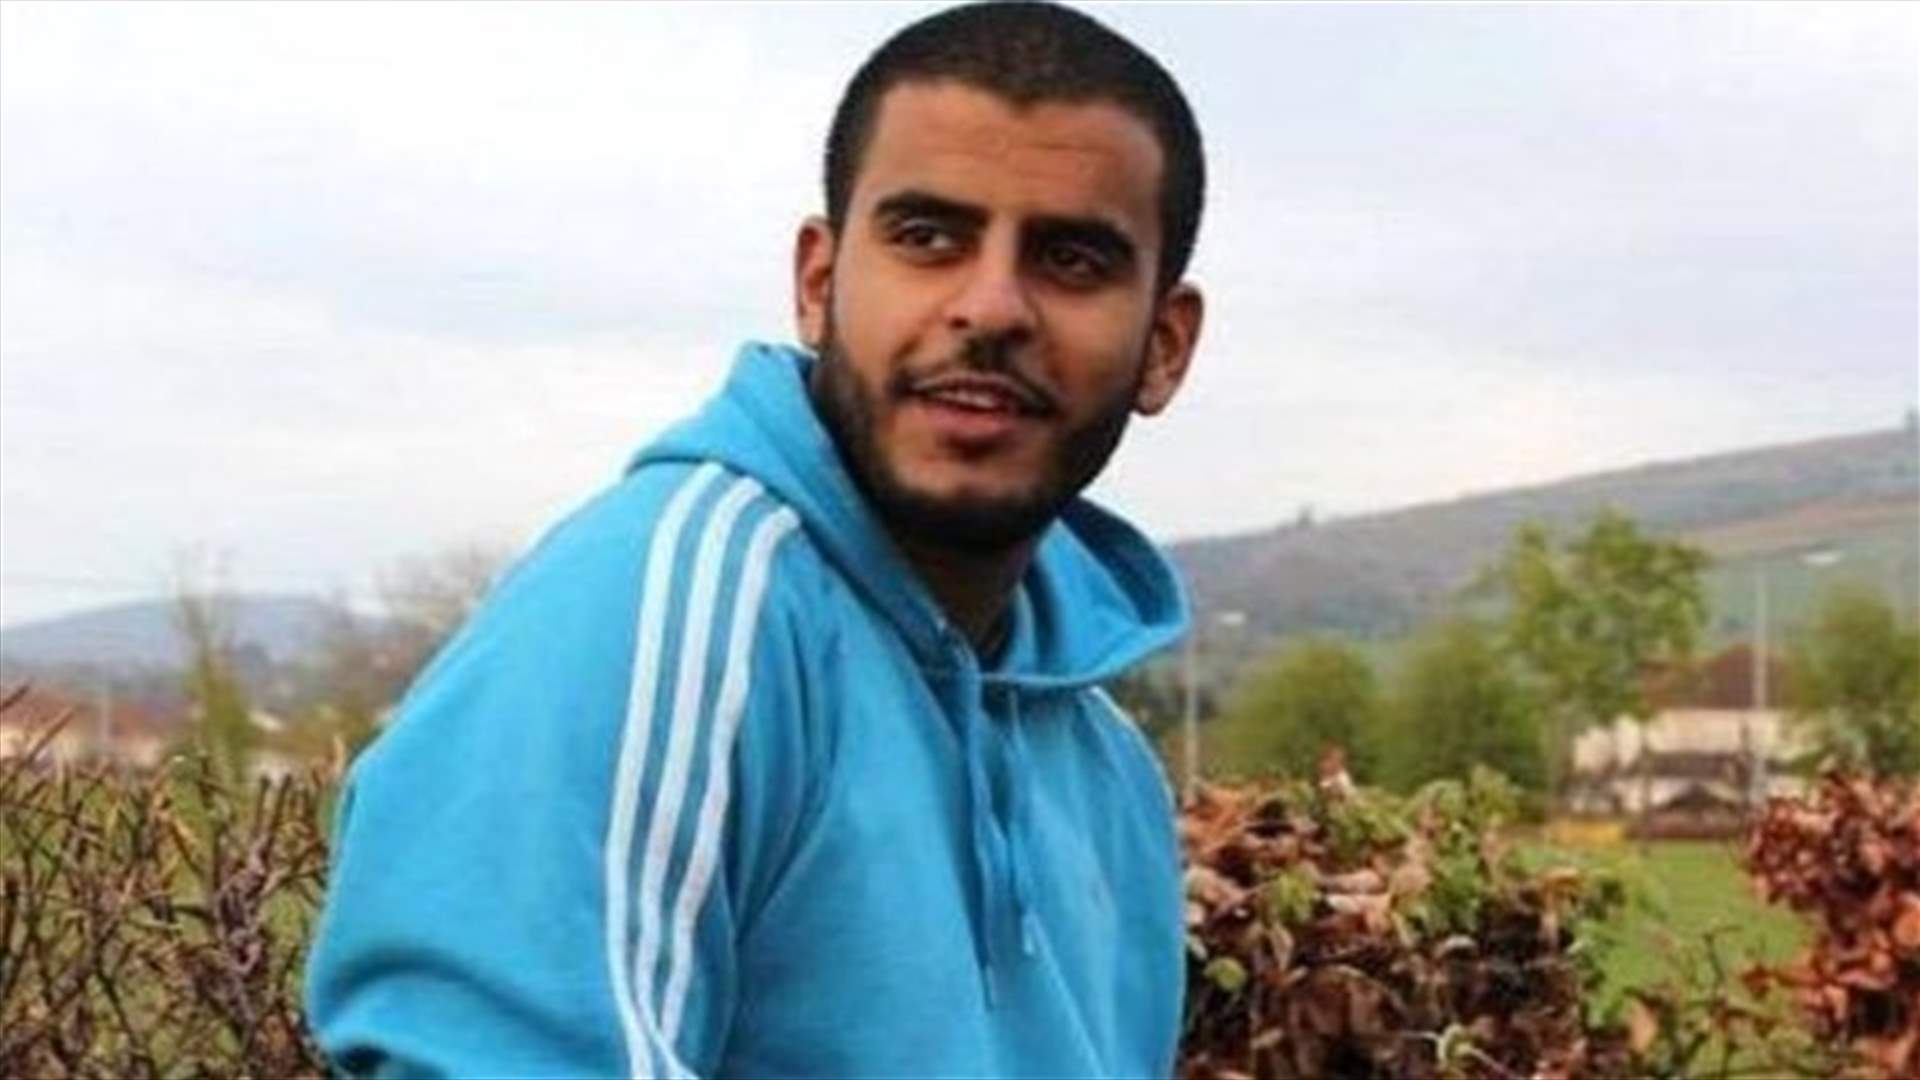 Irish student Ibrahim Halawa freed after 4 years in Egypt jail